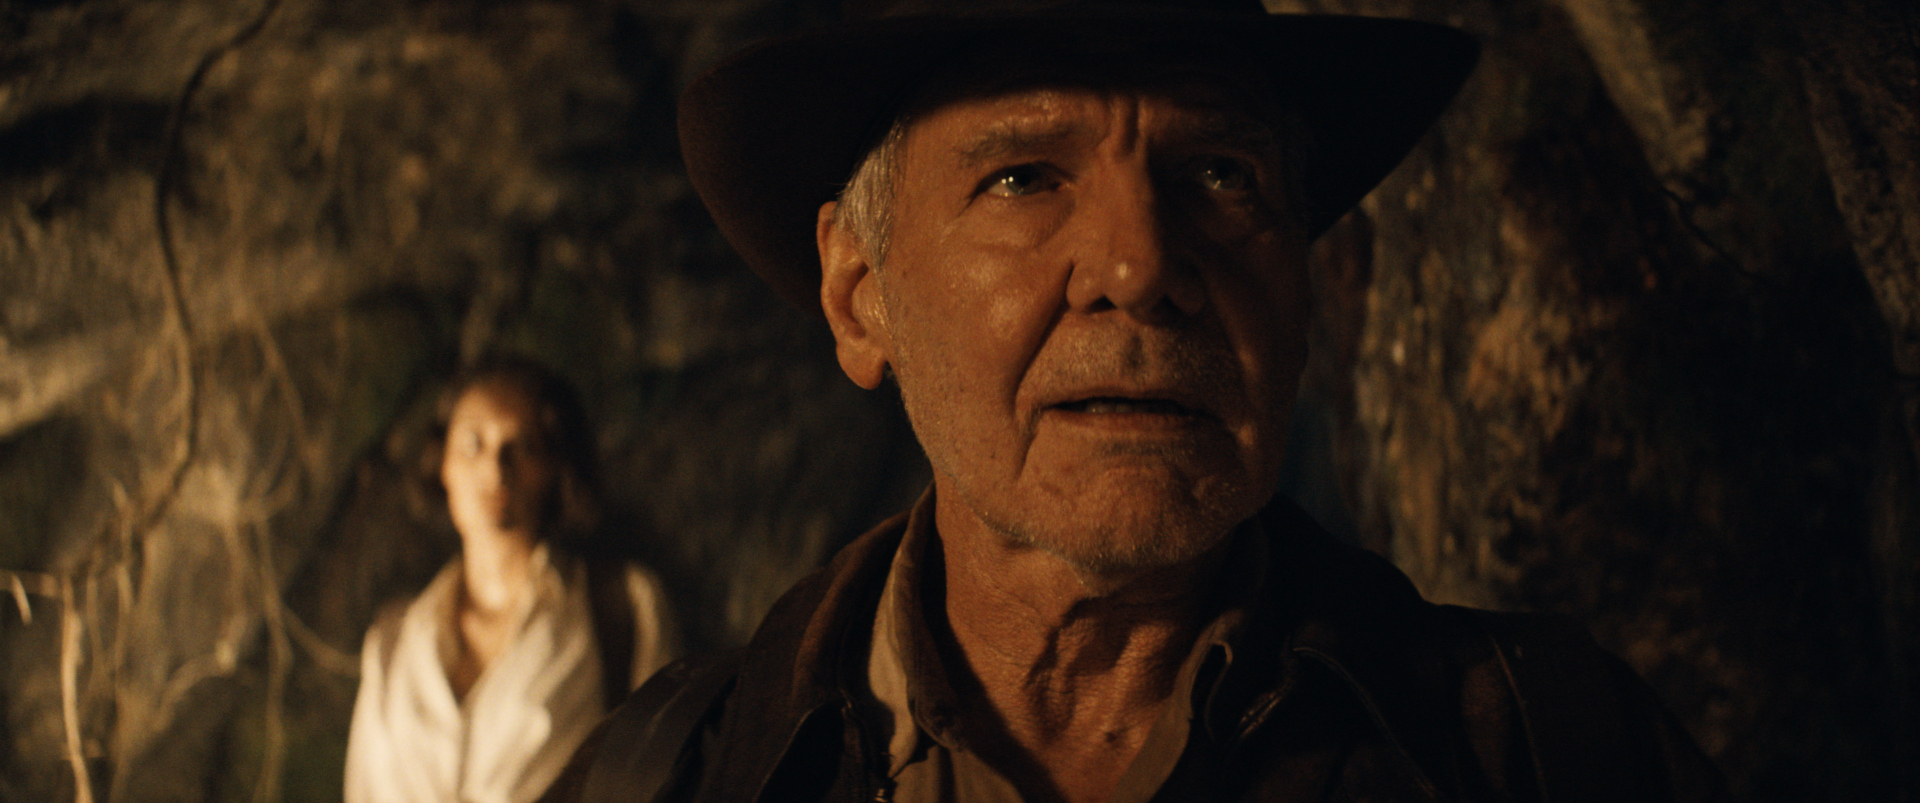 Harrison Ford trở lại với vai diễn Indiana Jones trứ danh ở tuổi 80